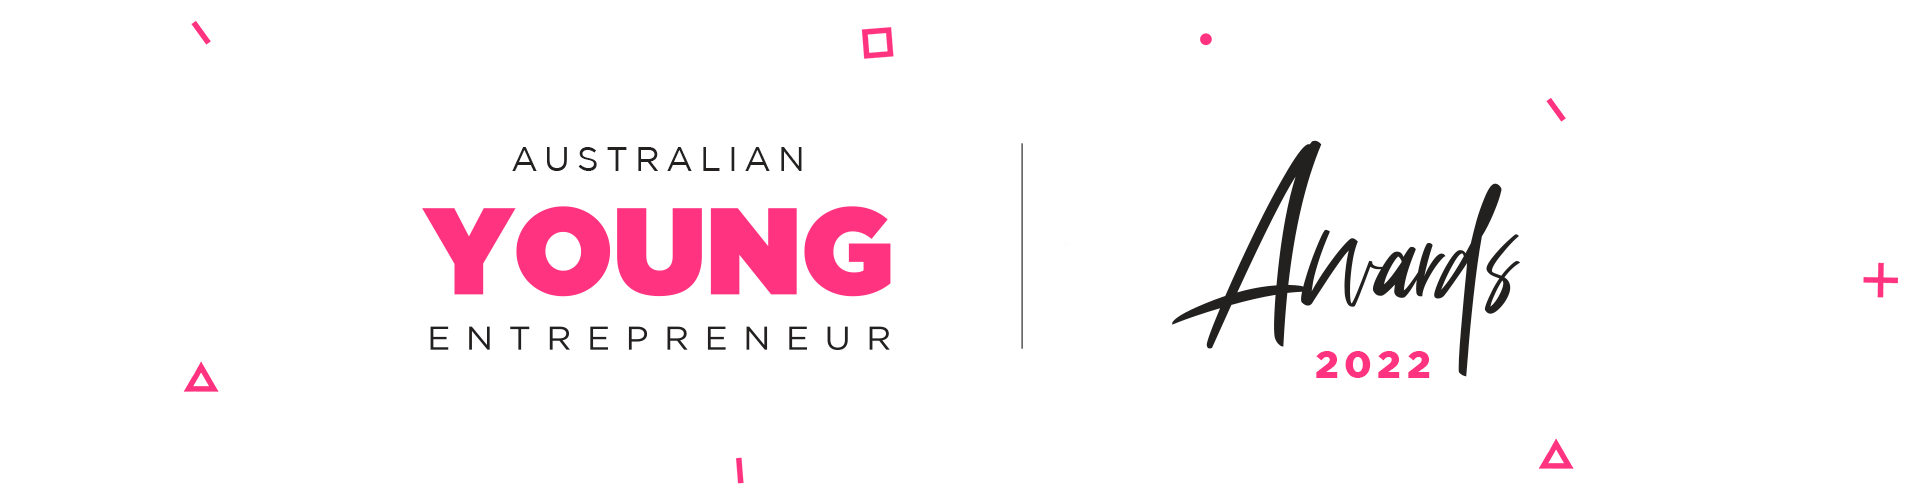 Australian Young Entrepreneur